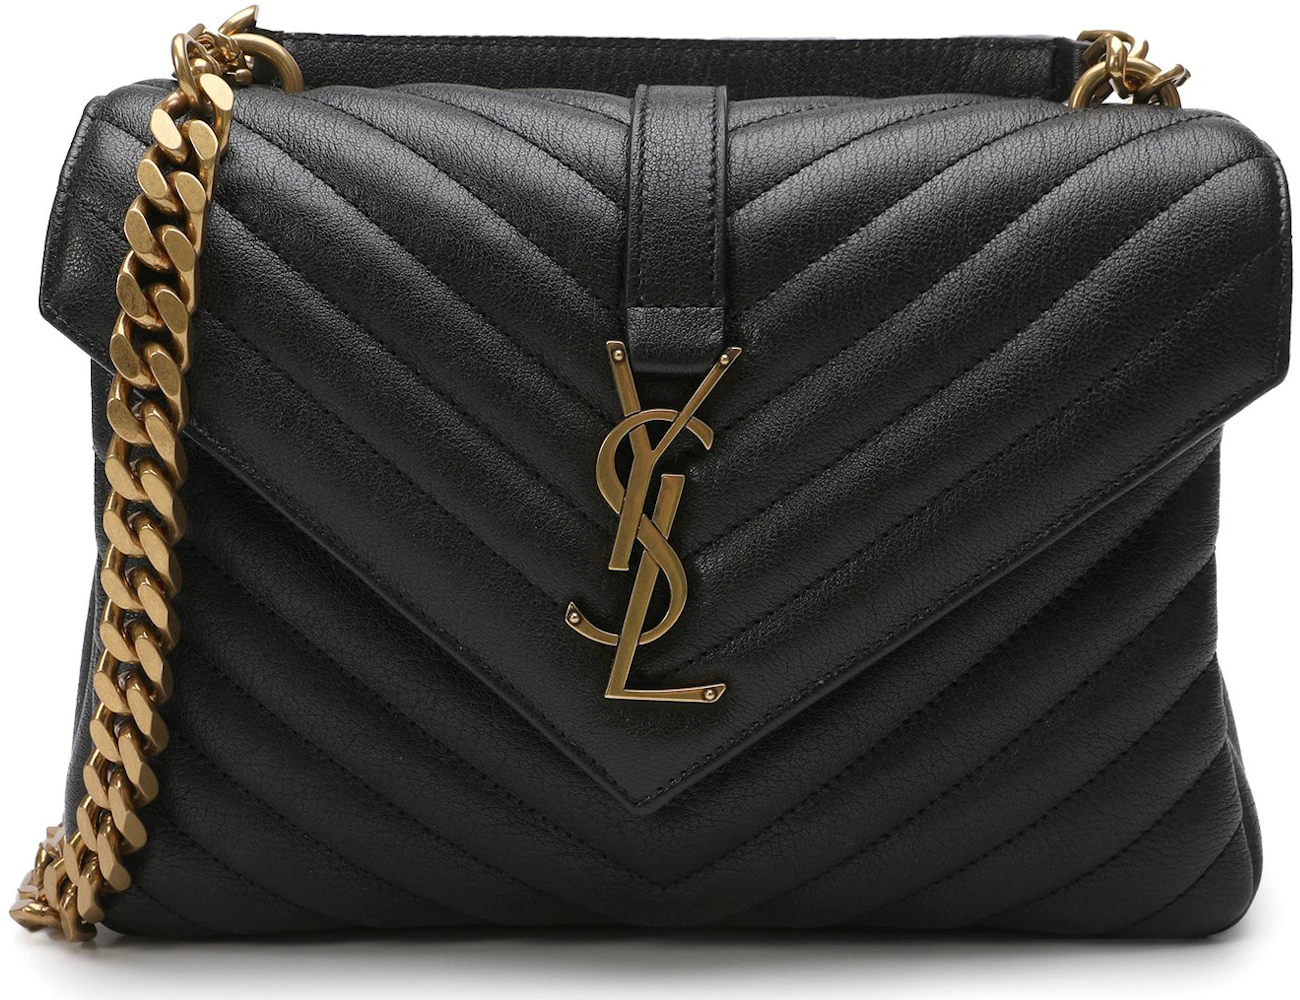 Saint Laurent Quilted Medium Bags & Handbags for Women for sale